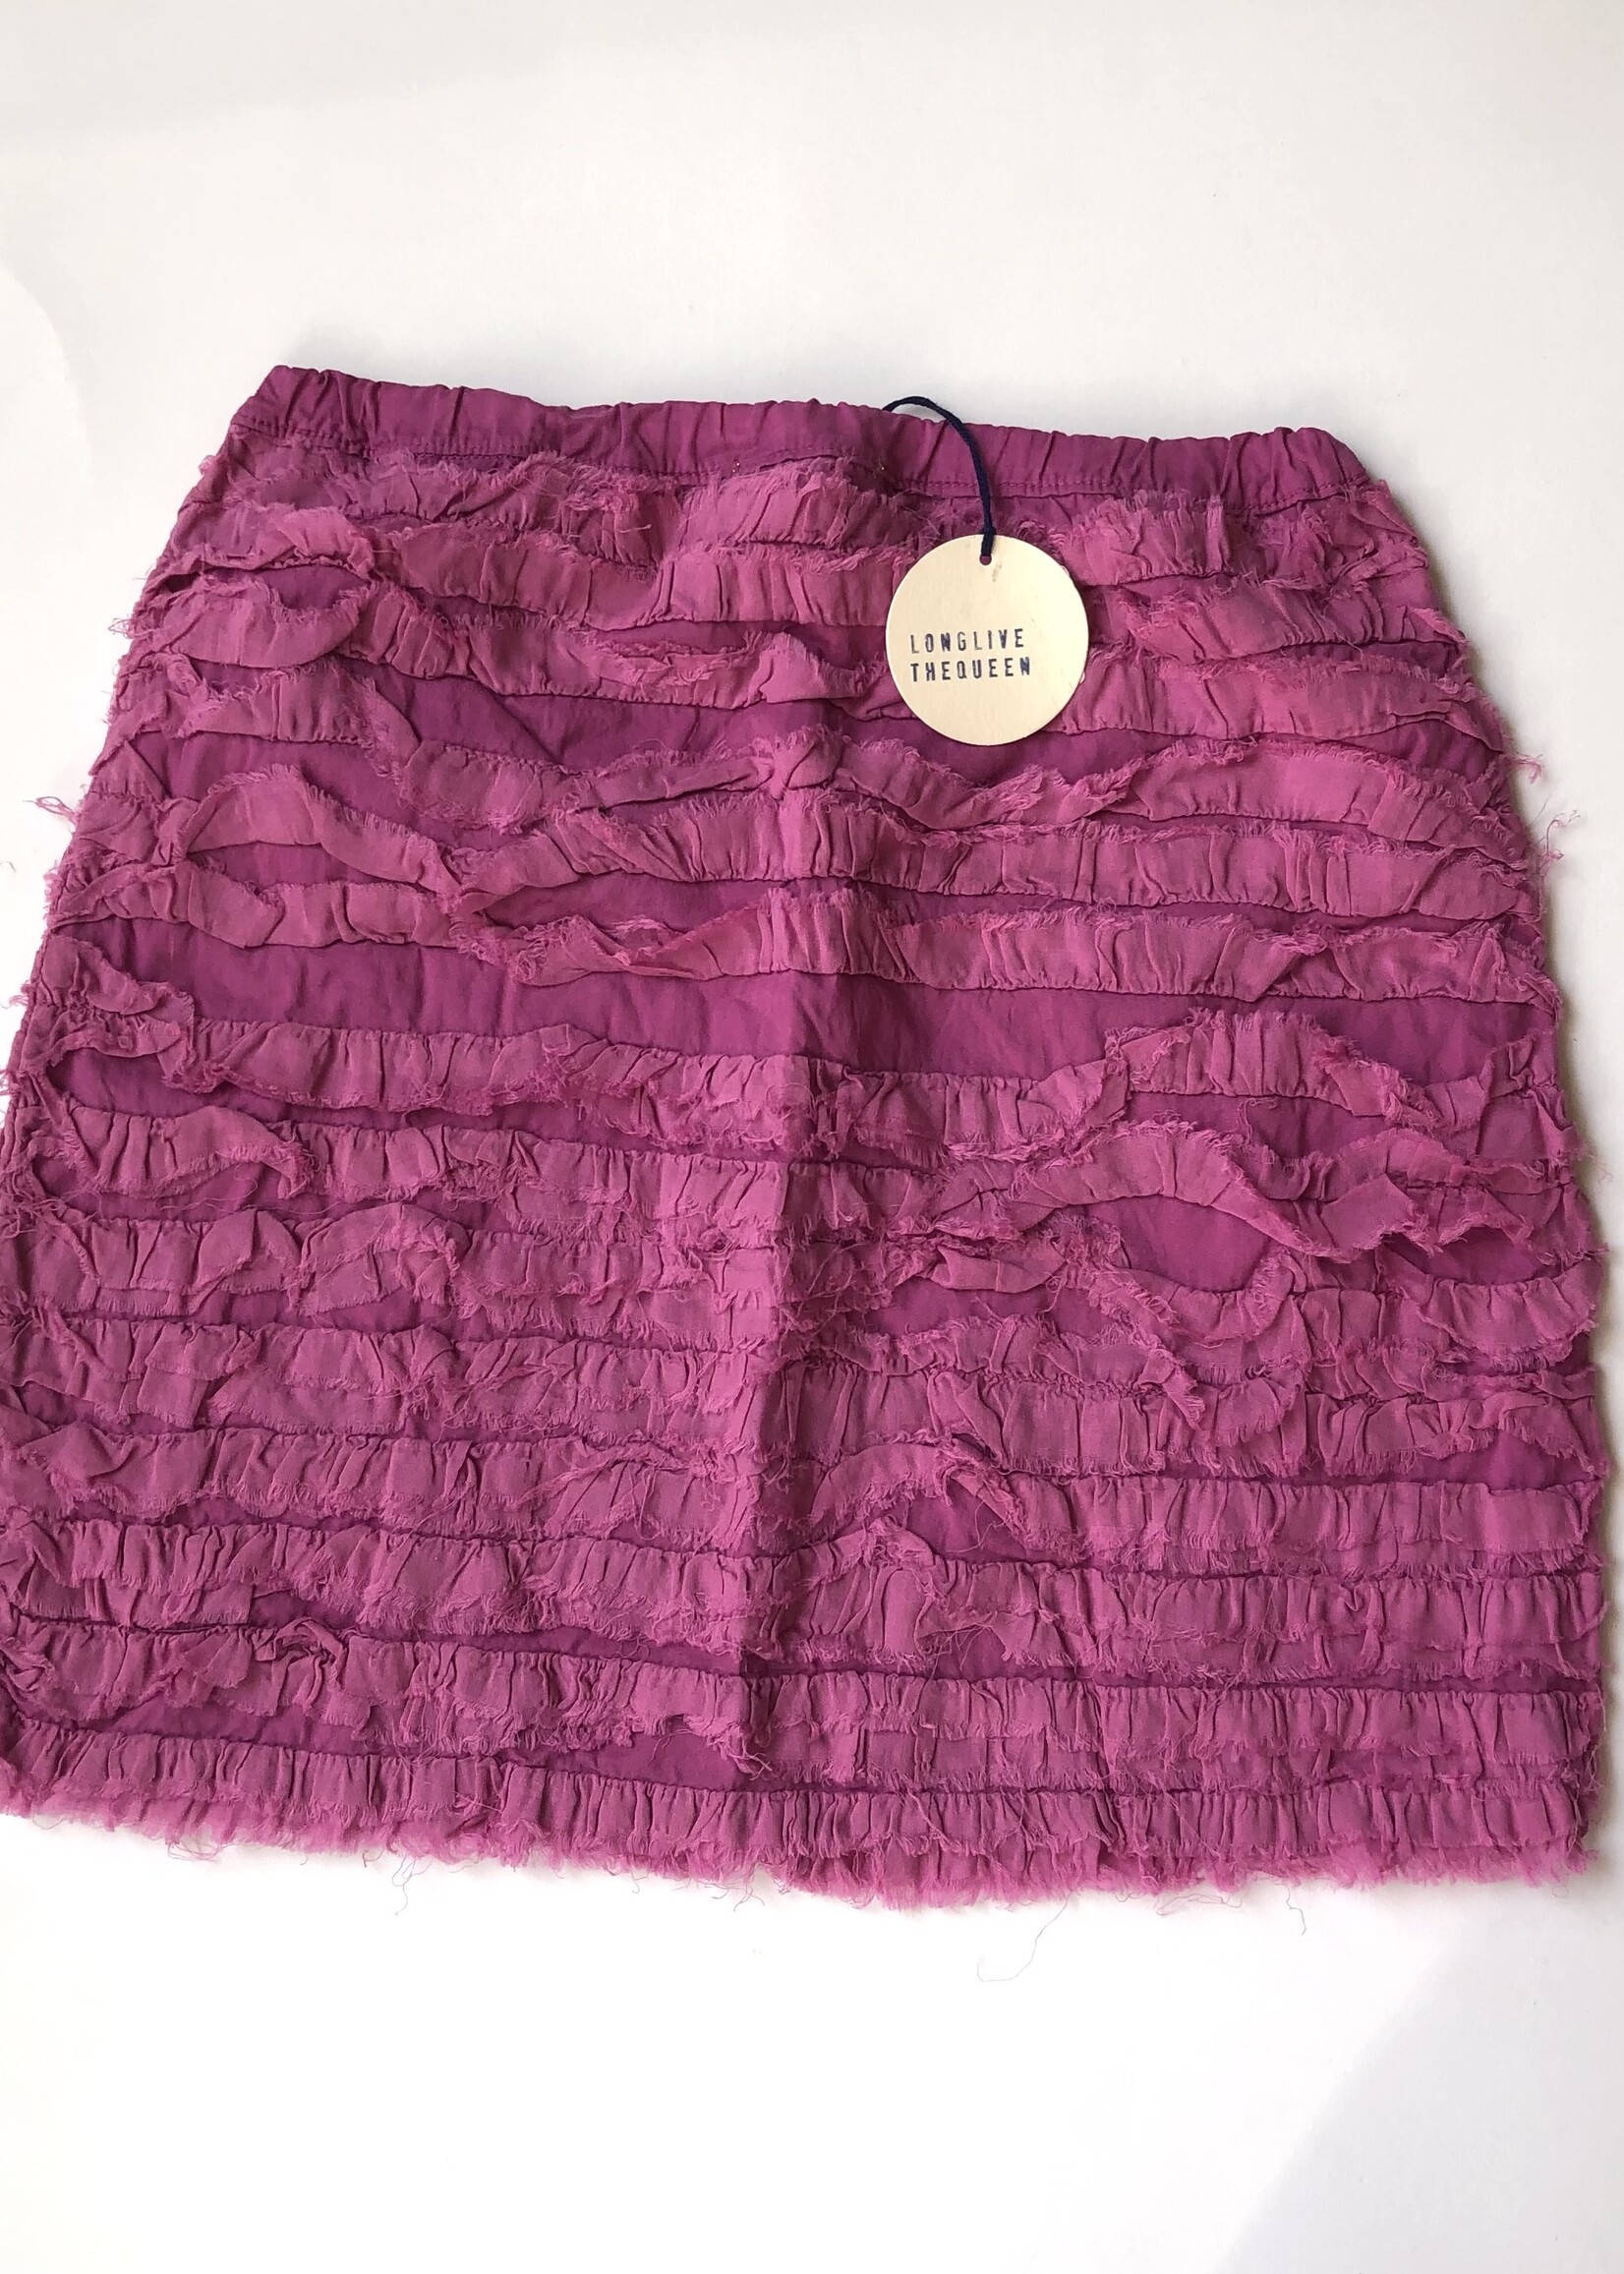 Long Live The Queen   Fuchsia ruffle skirt 6y